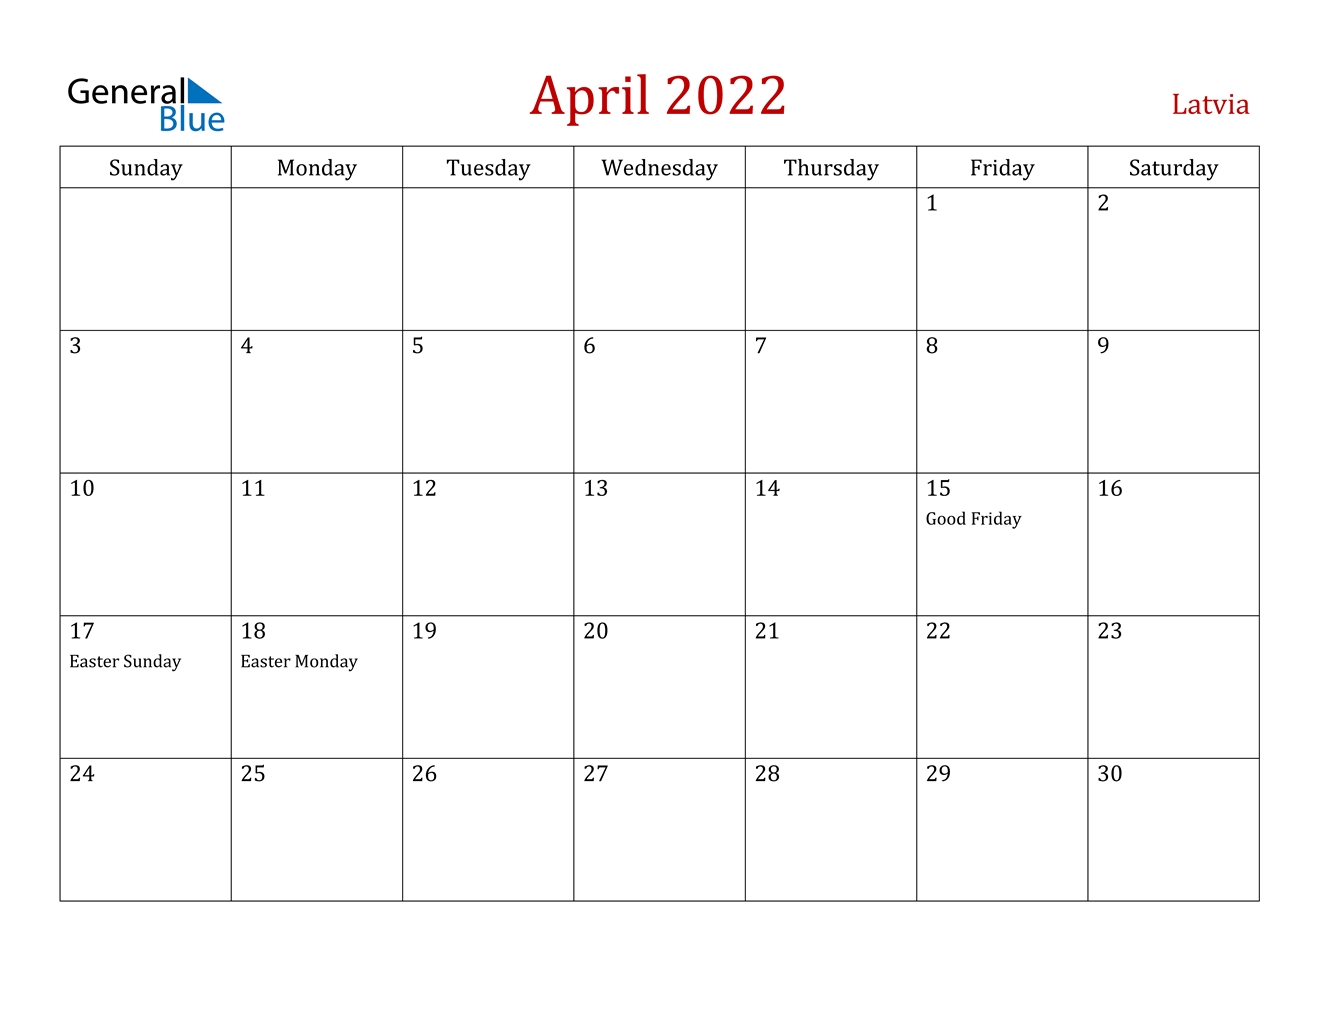 April 2022 Calendar - Latvia